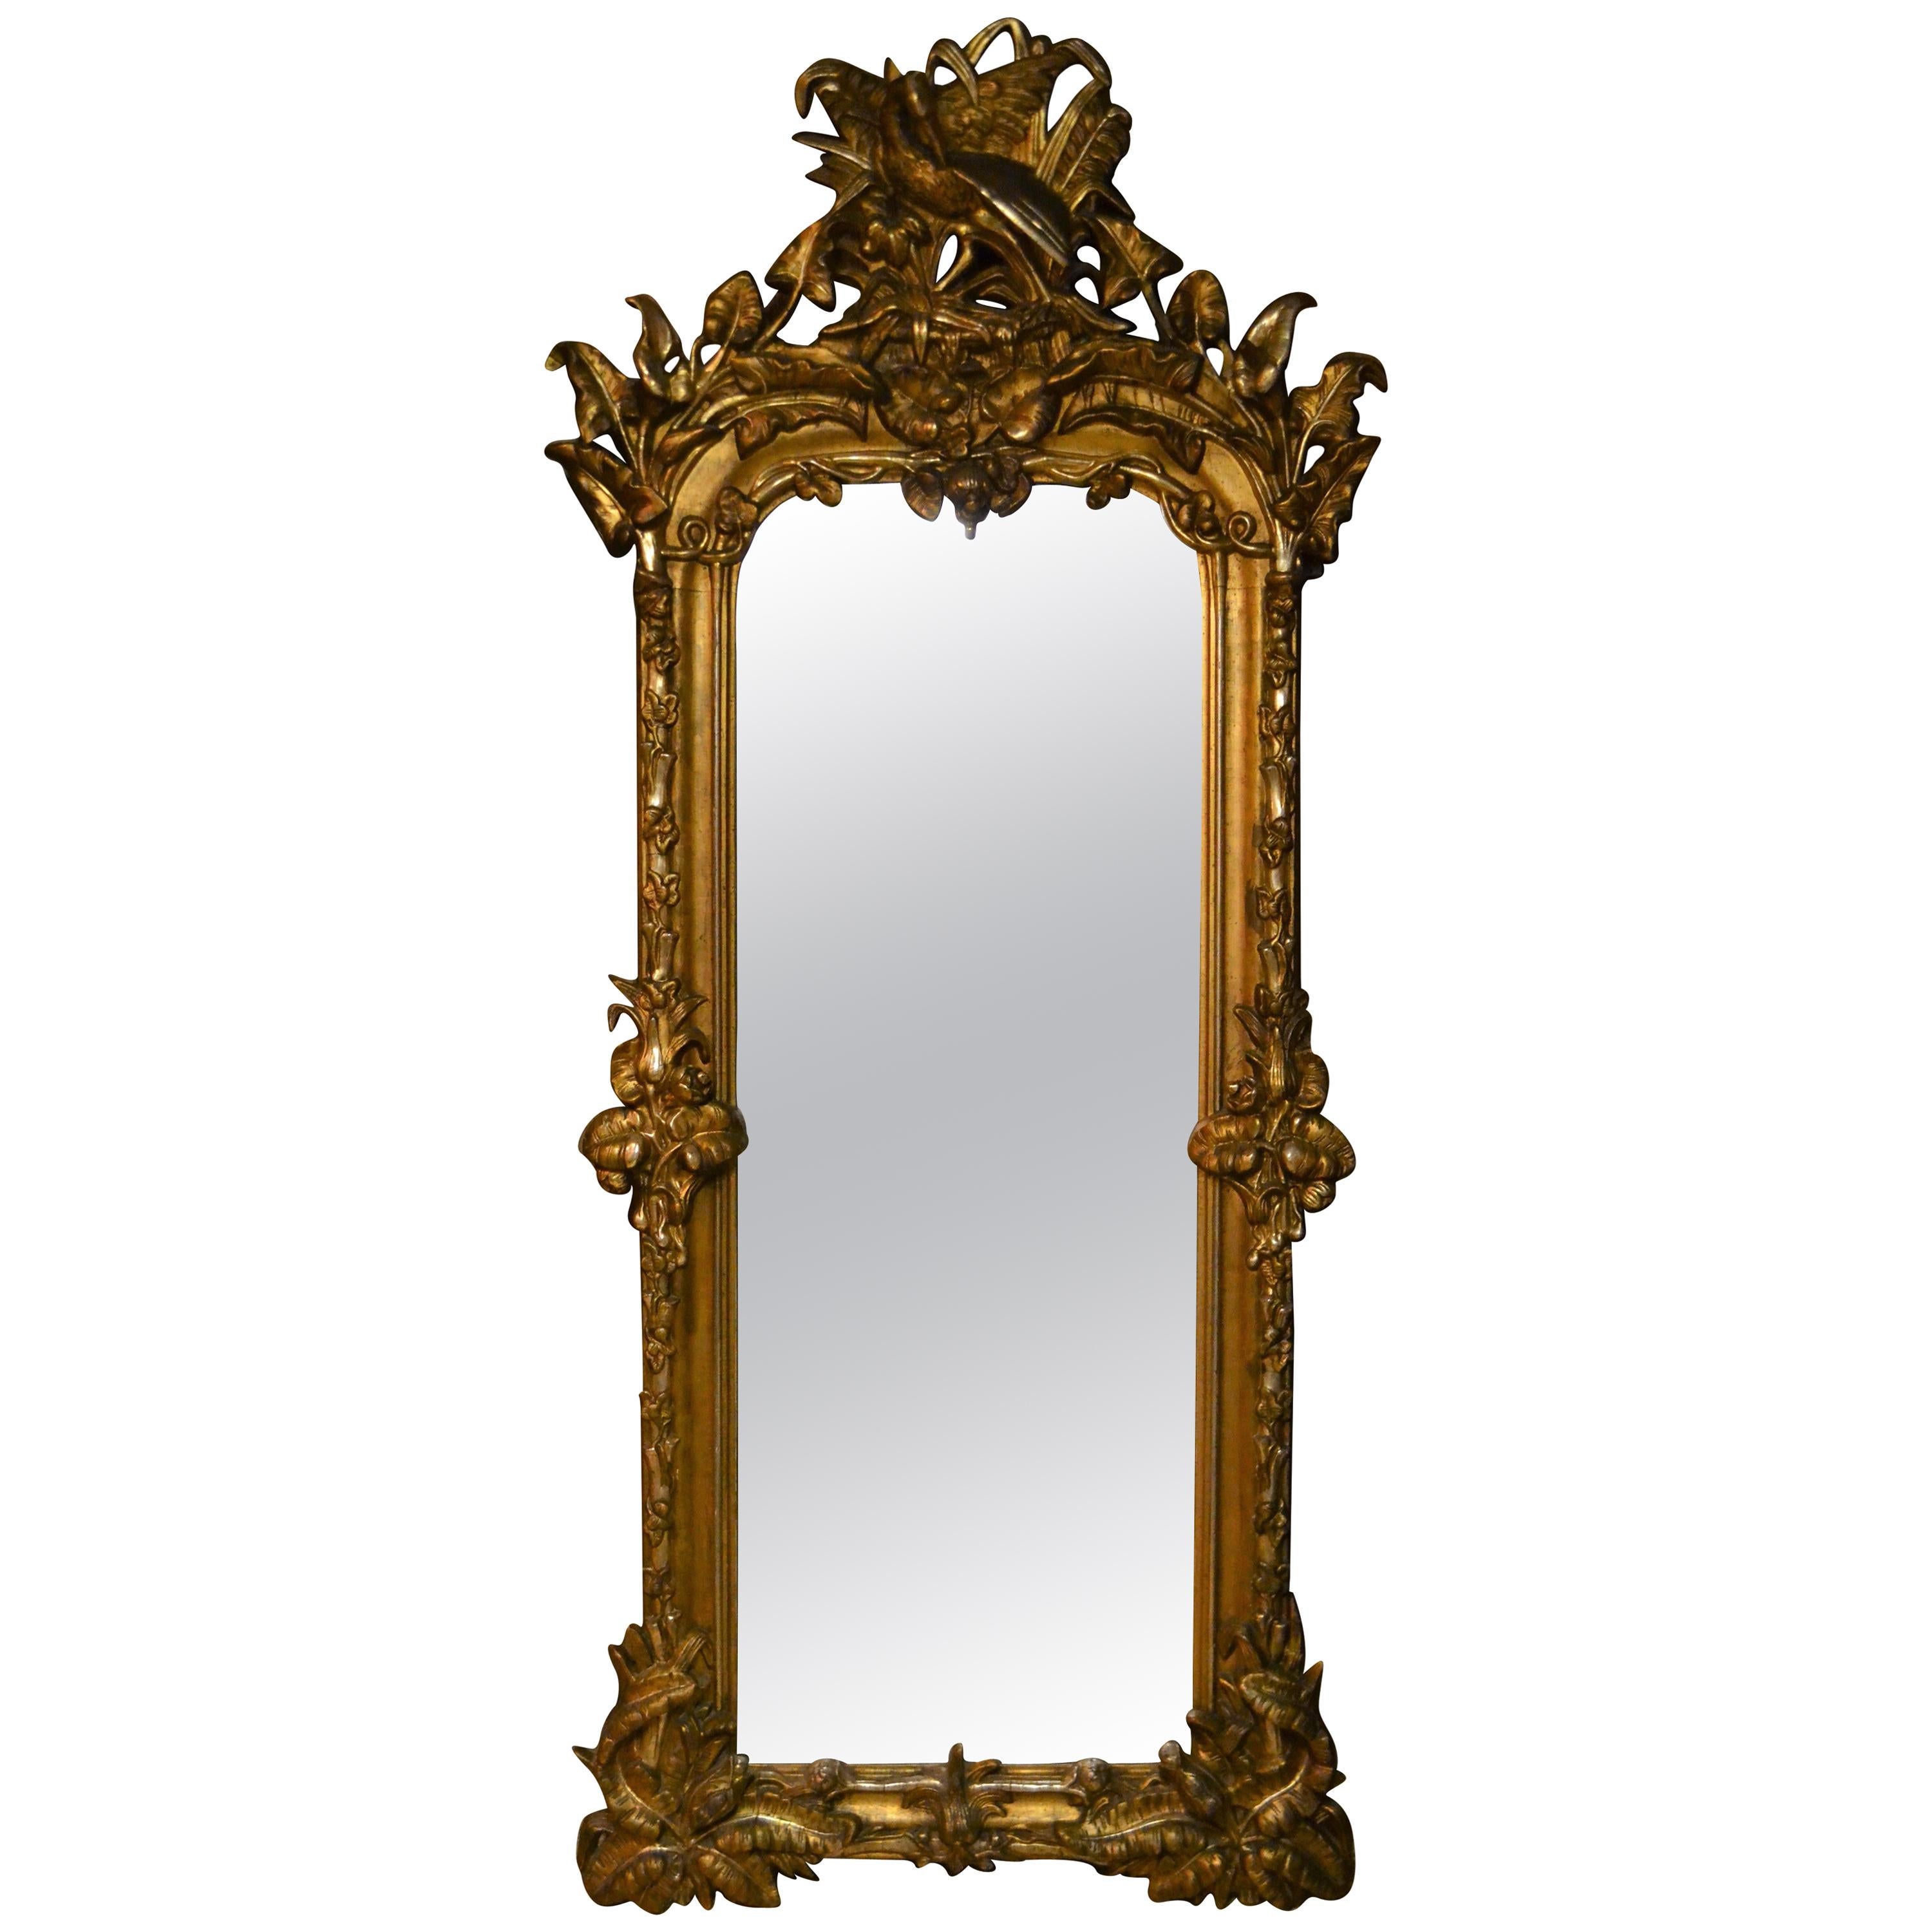 Antique French Pier Gold Leaf Mirror